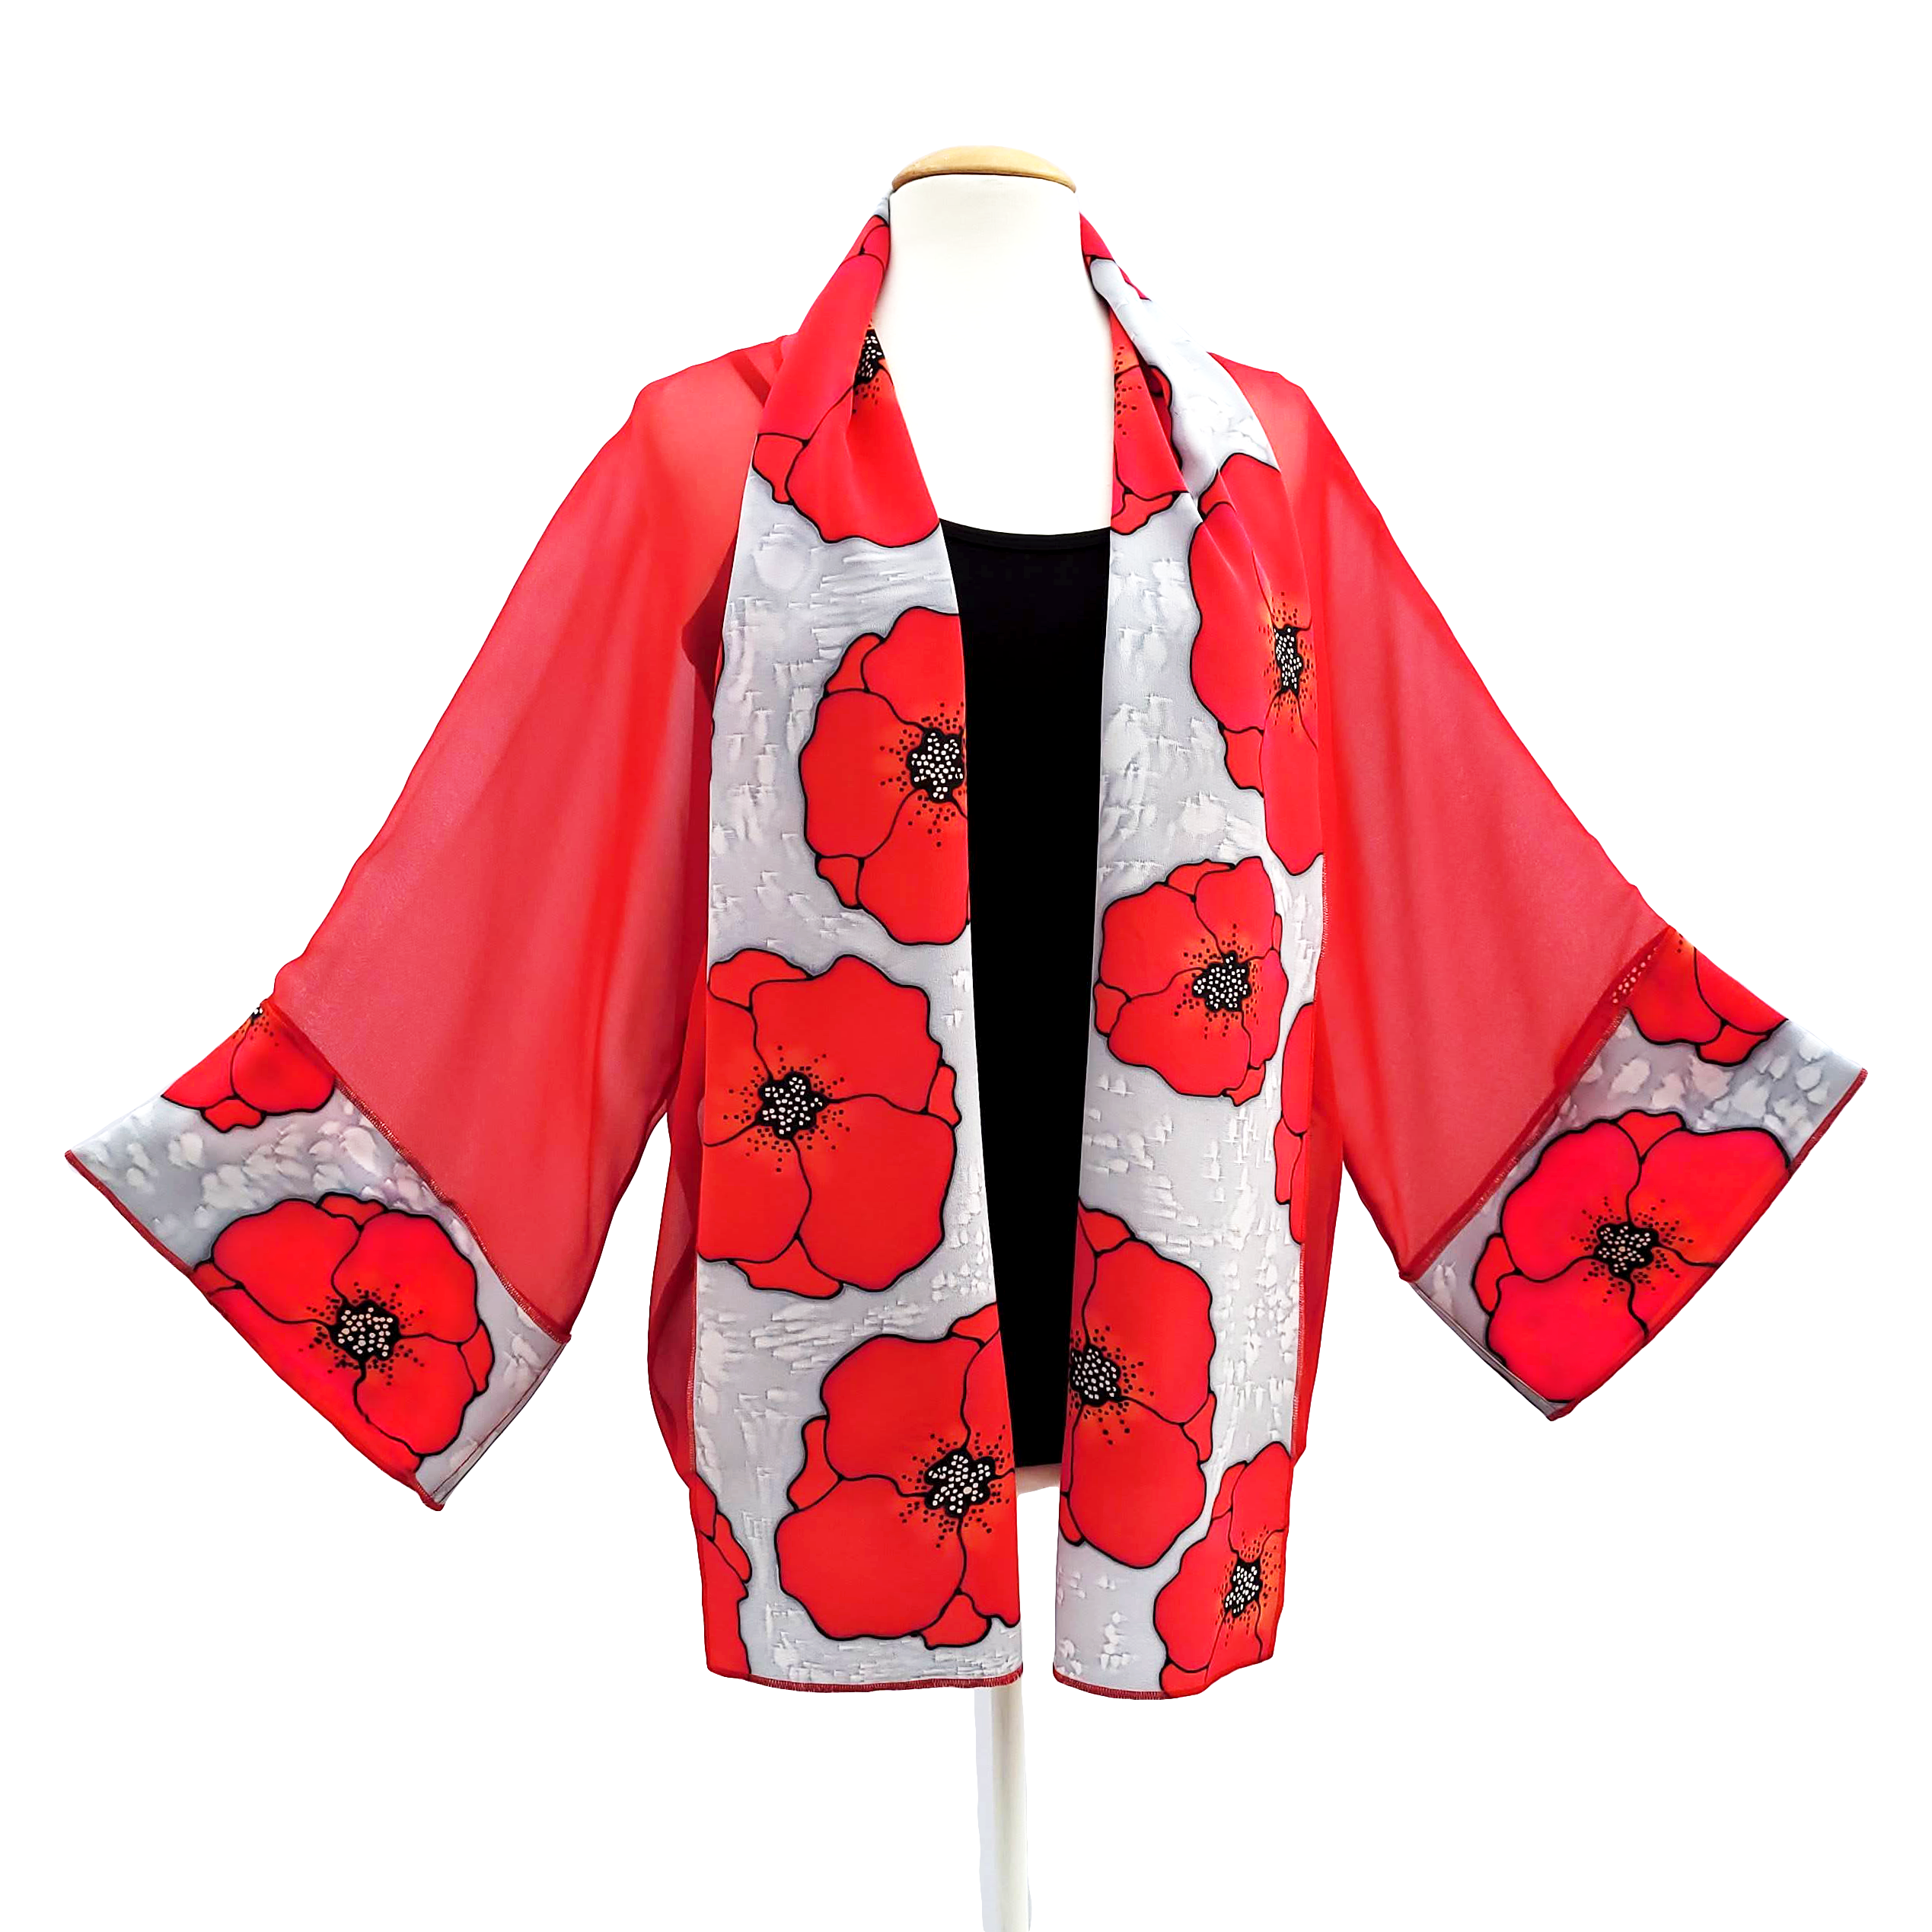 Red poppy flowers hand painted pure silk kimono top handmade by Lynne Kiel